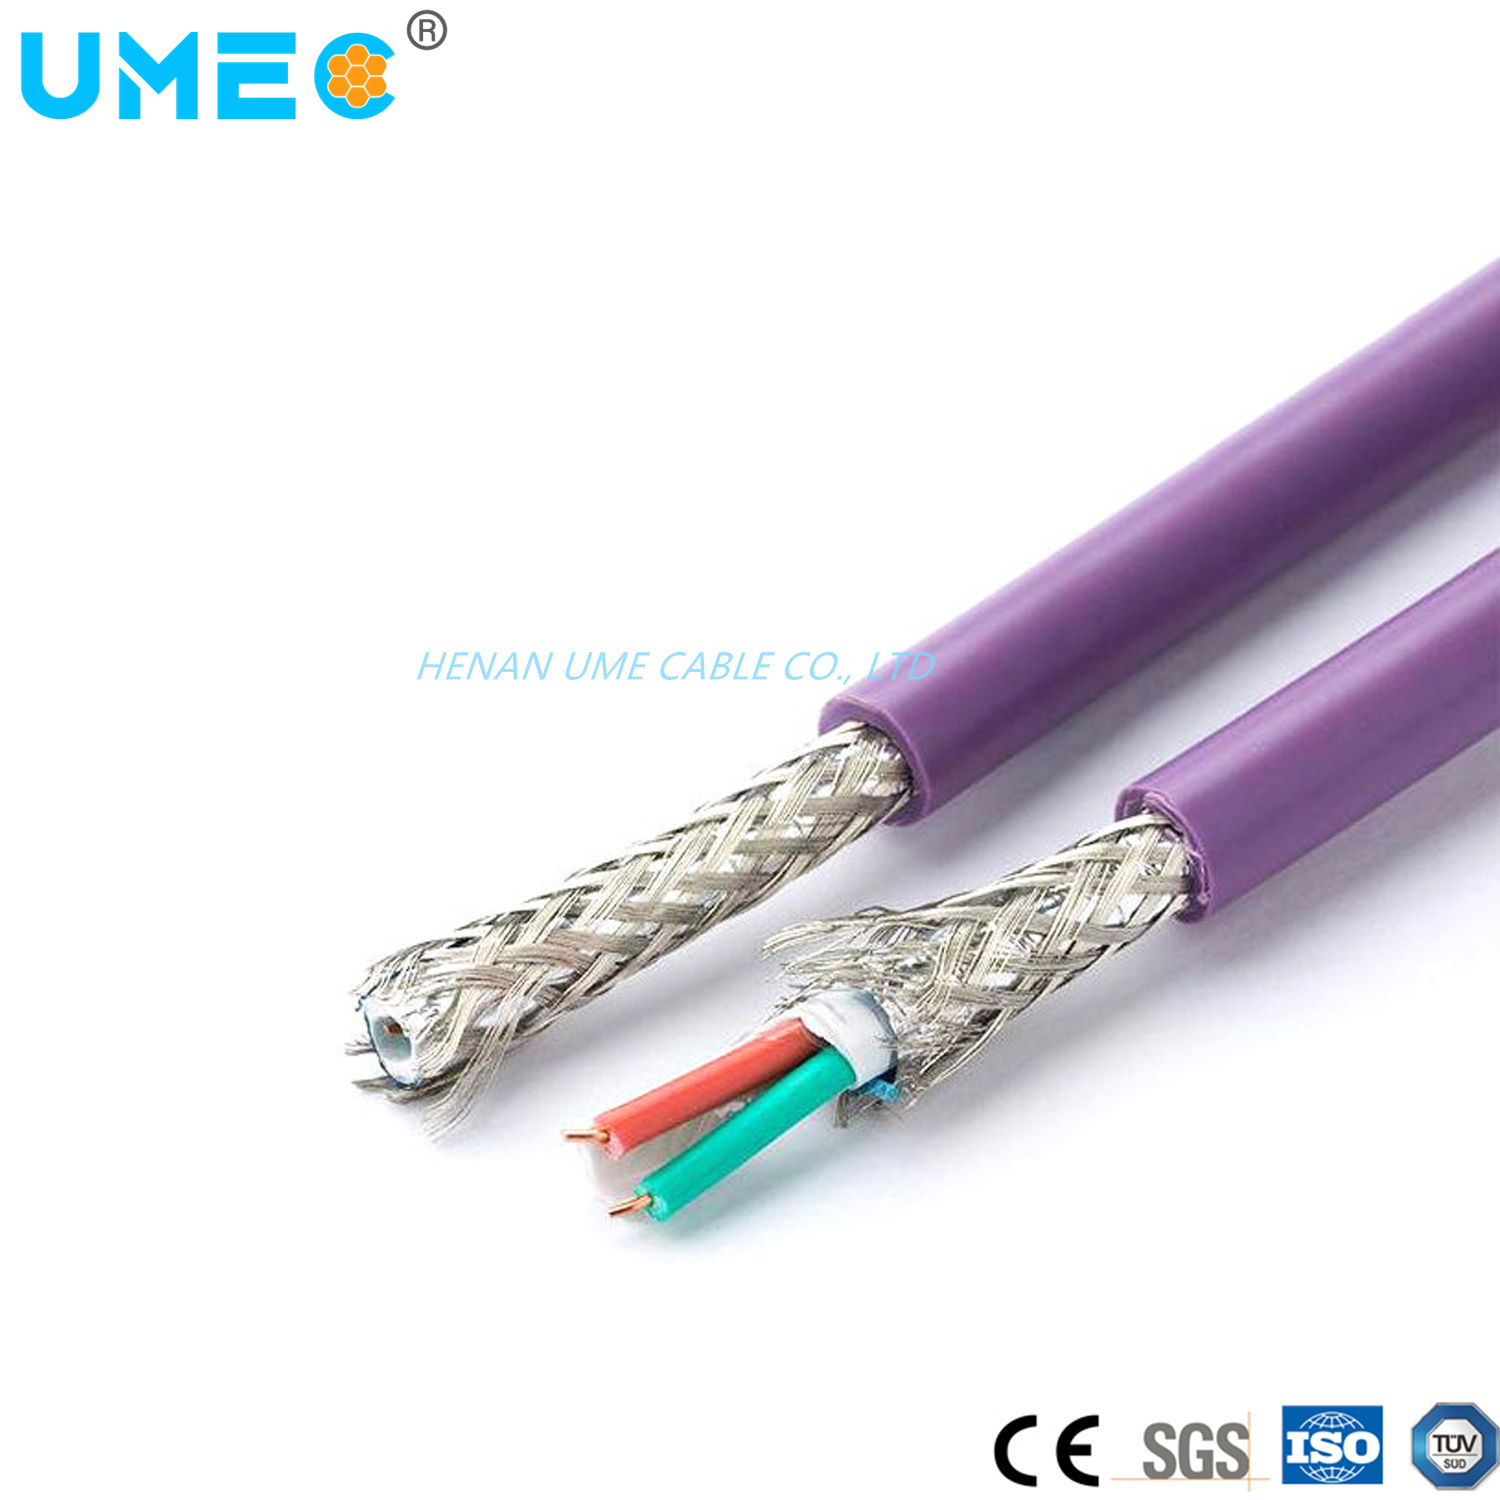 CE Dp Bus Cable 2-Core Shielded 485 Communication Line 6xv1830-0eh10